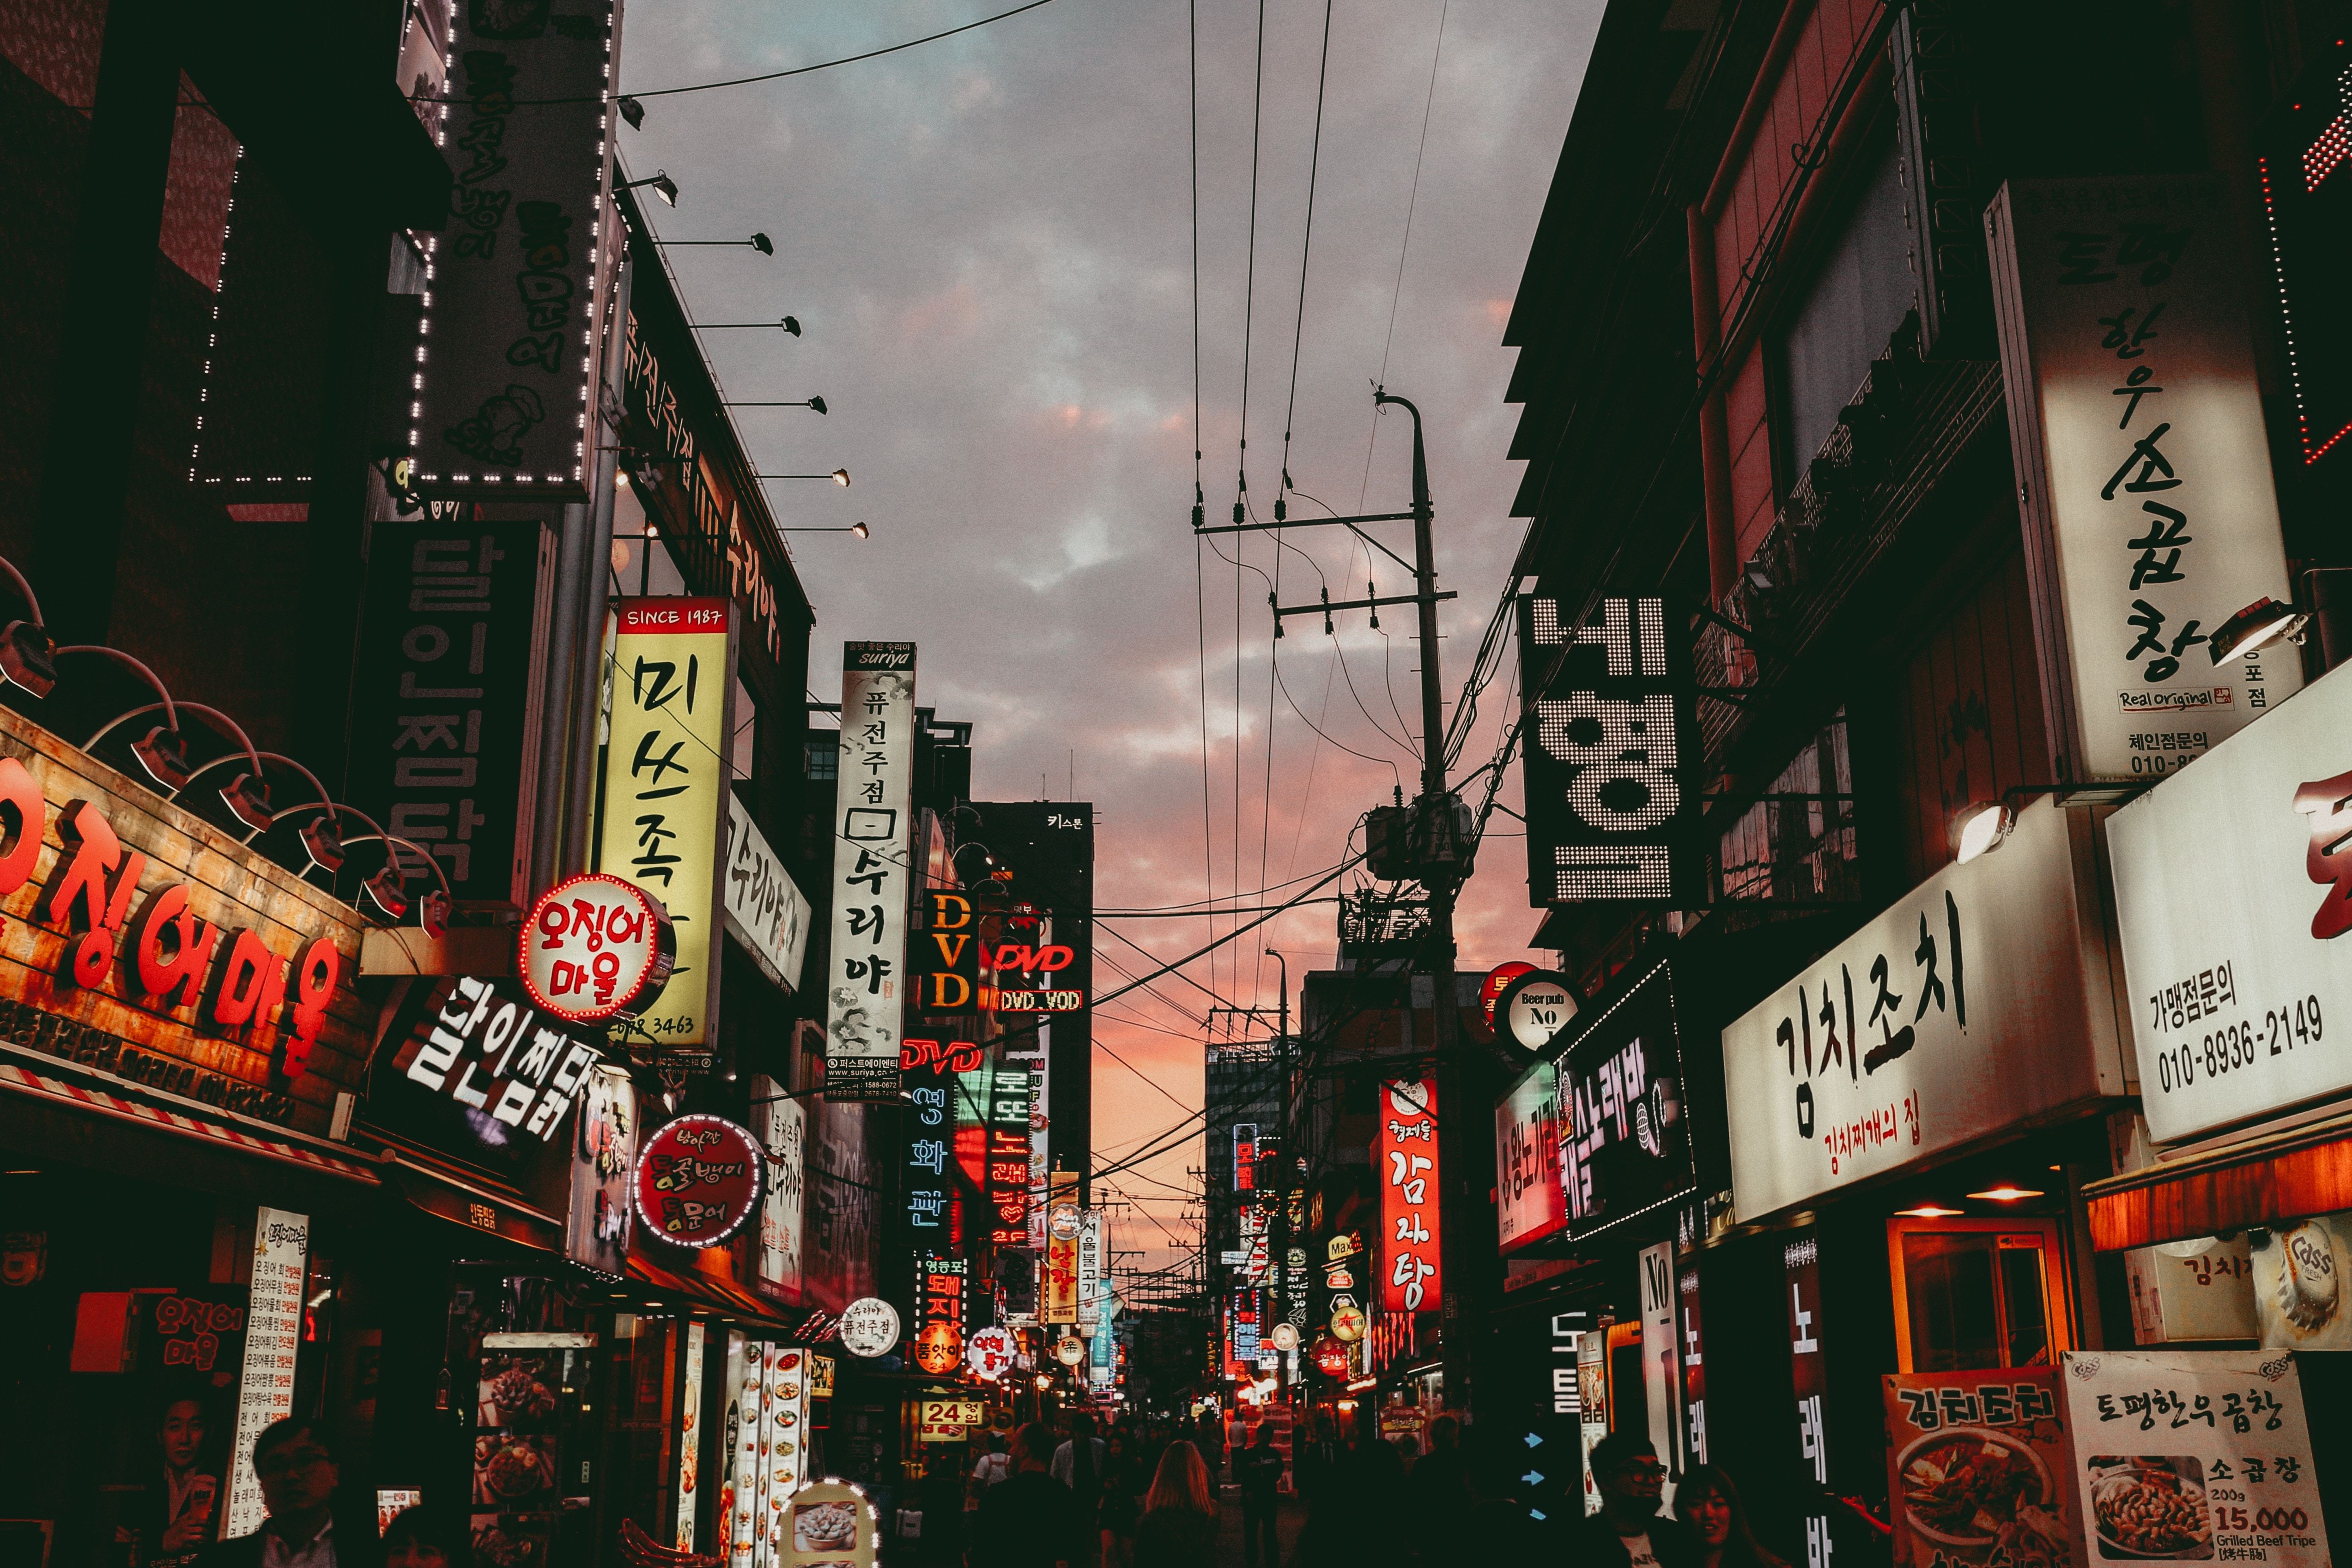 Street in Seoul, Source: Photo by Sava on Unsplash